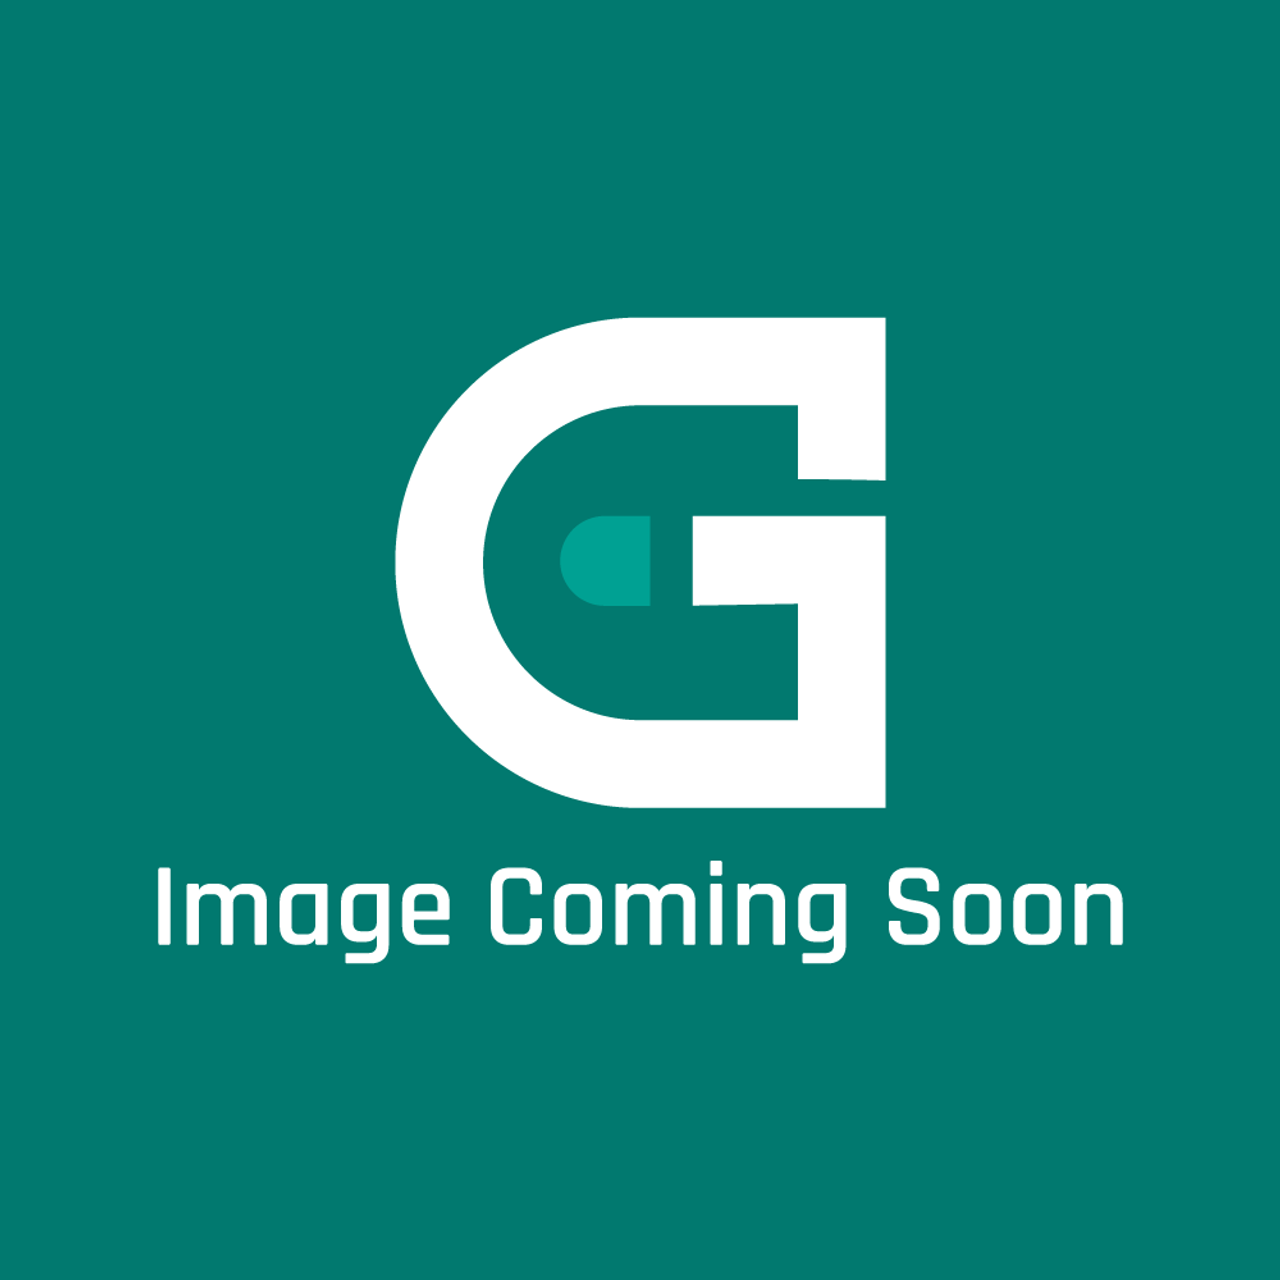 GE Appliances WB36X27741 - Backguard Range - Image Coming Soon!